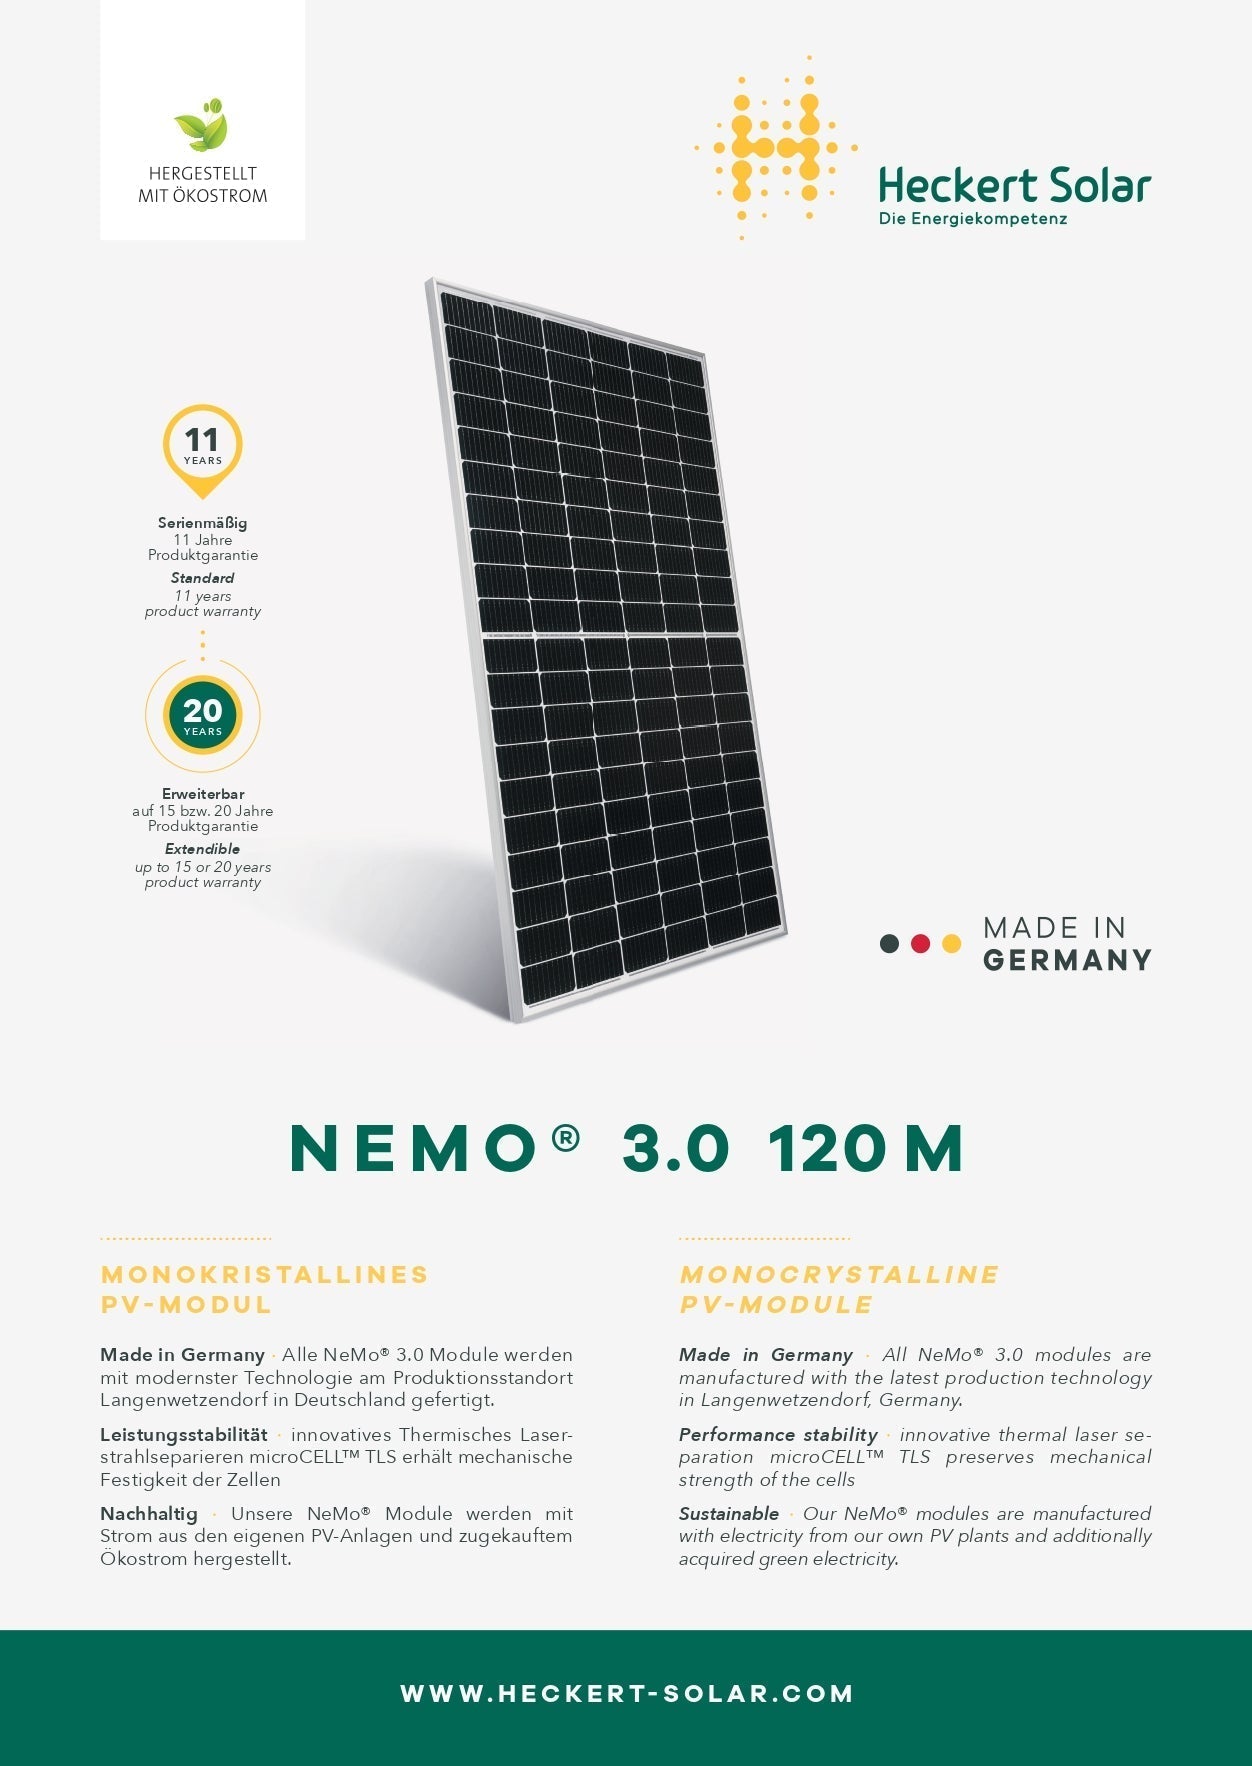 B-Ware / Sonderpreis Heckert Solar Solarmodul NeMo® 3.0 120 M 375 AR (B) - Dachflug Solar